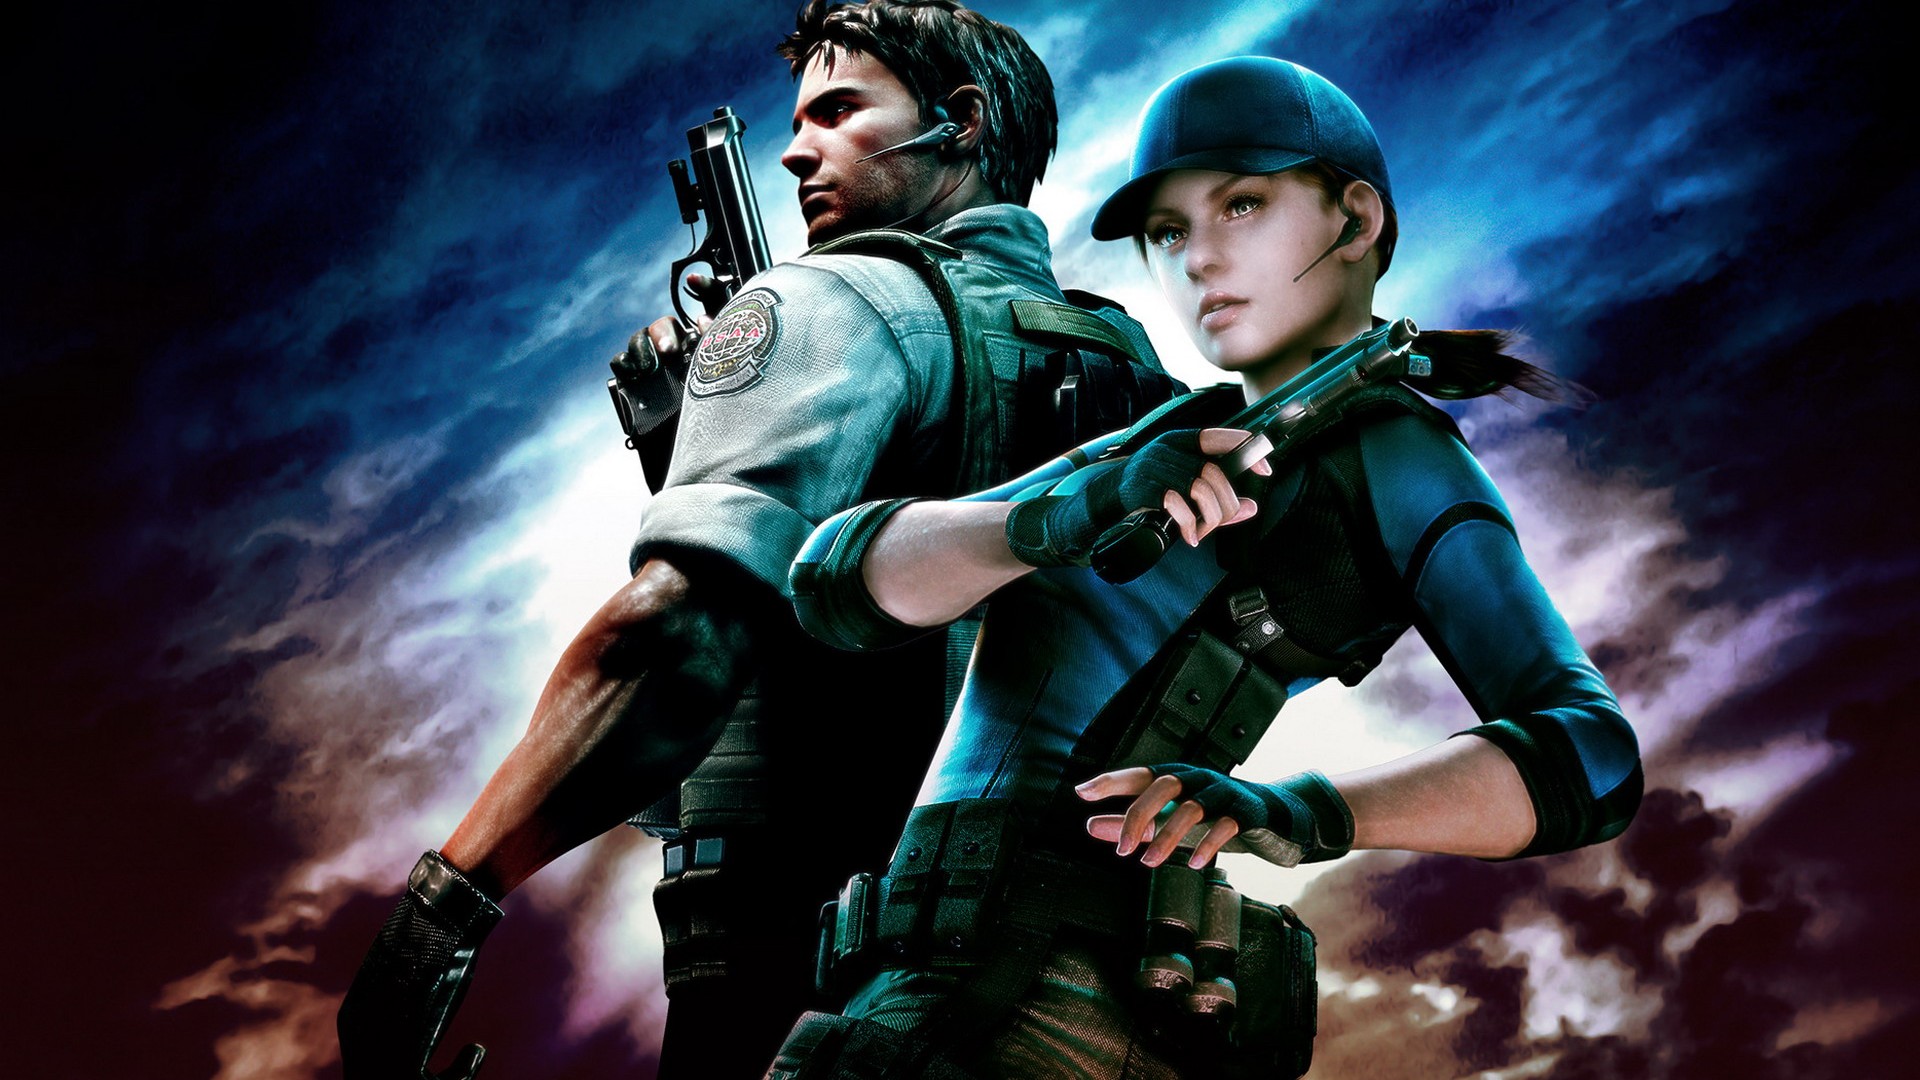 Resident Evil, Jill Valentine, Chris Redfield, BSAA (Bioterrorism Security Assessment Alliance) - desktop wallpaper